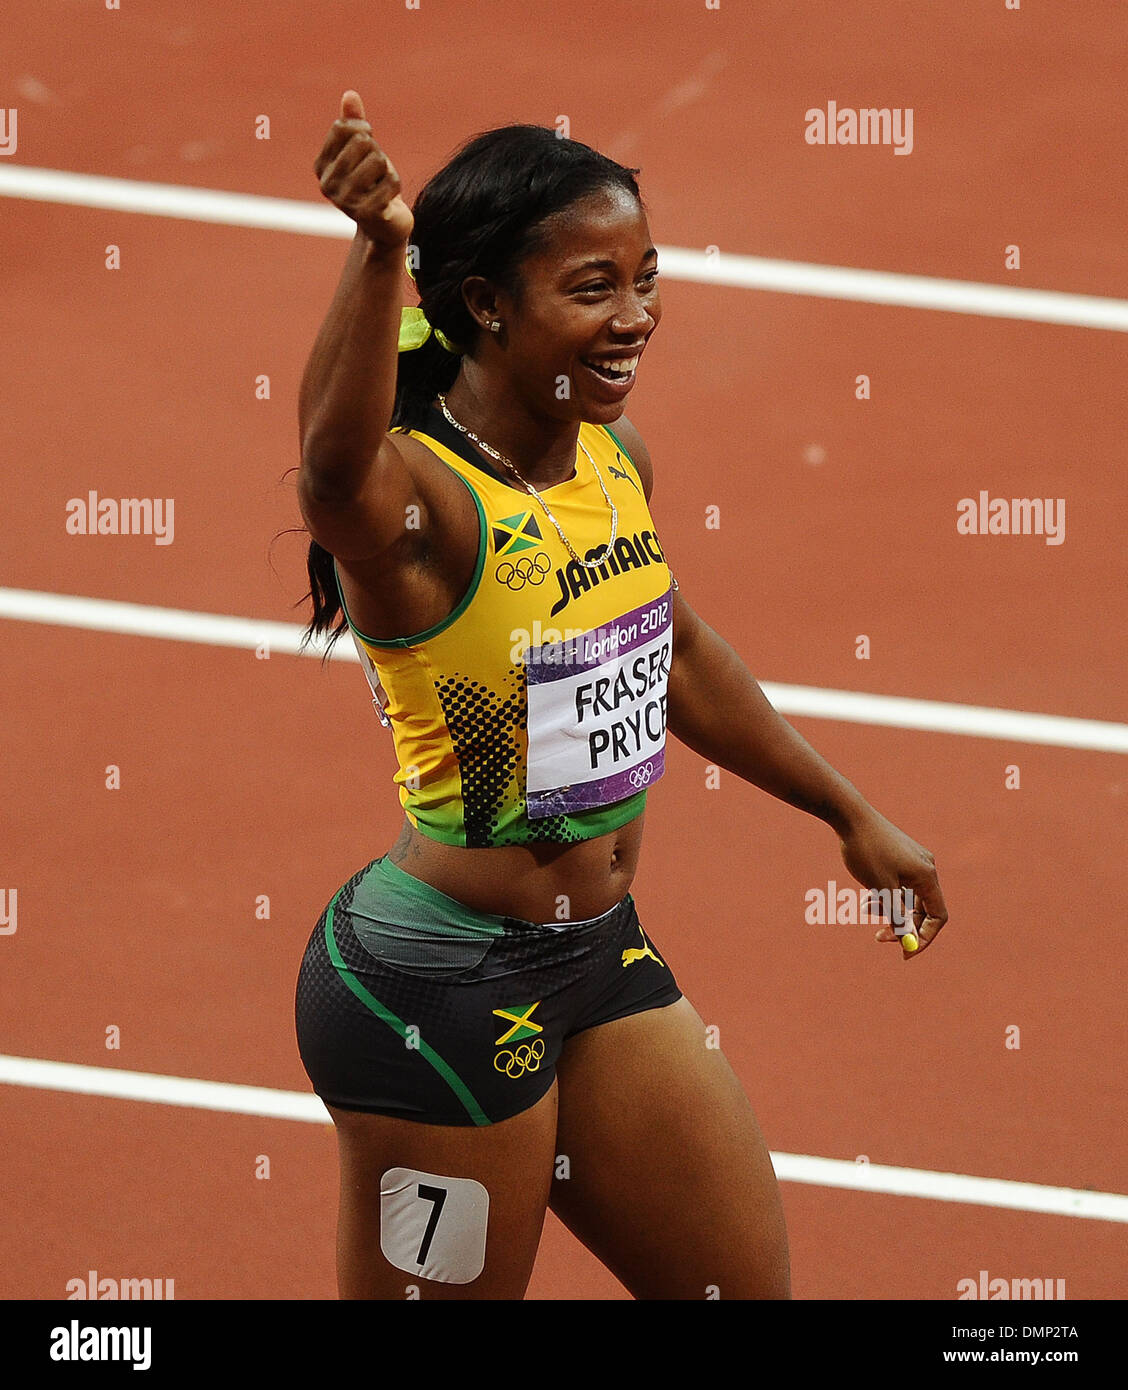 shelly-ann-fraser-pryce-of-jamaica-celebrates-winning-gold-in-womens-DMP2TA.jpg